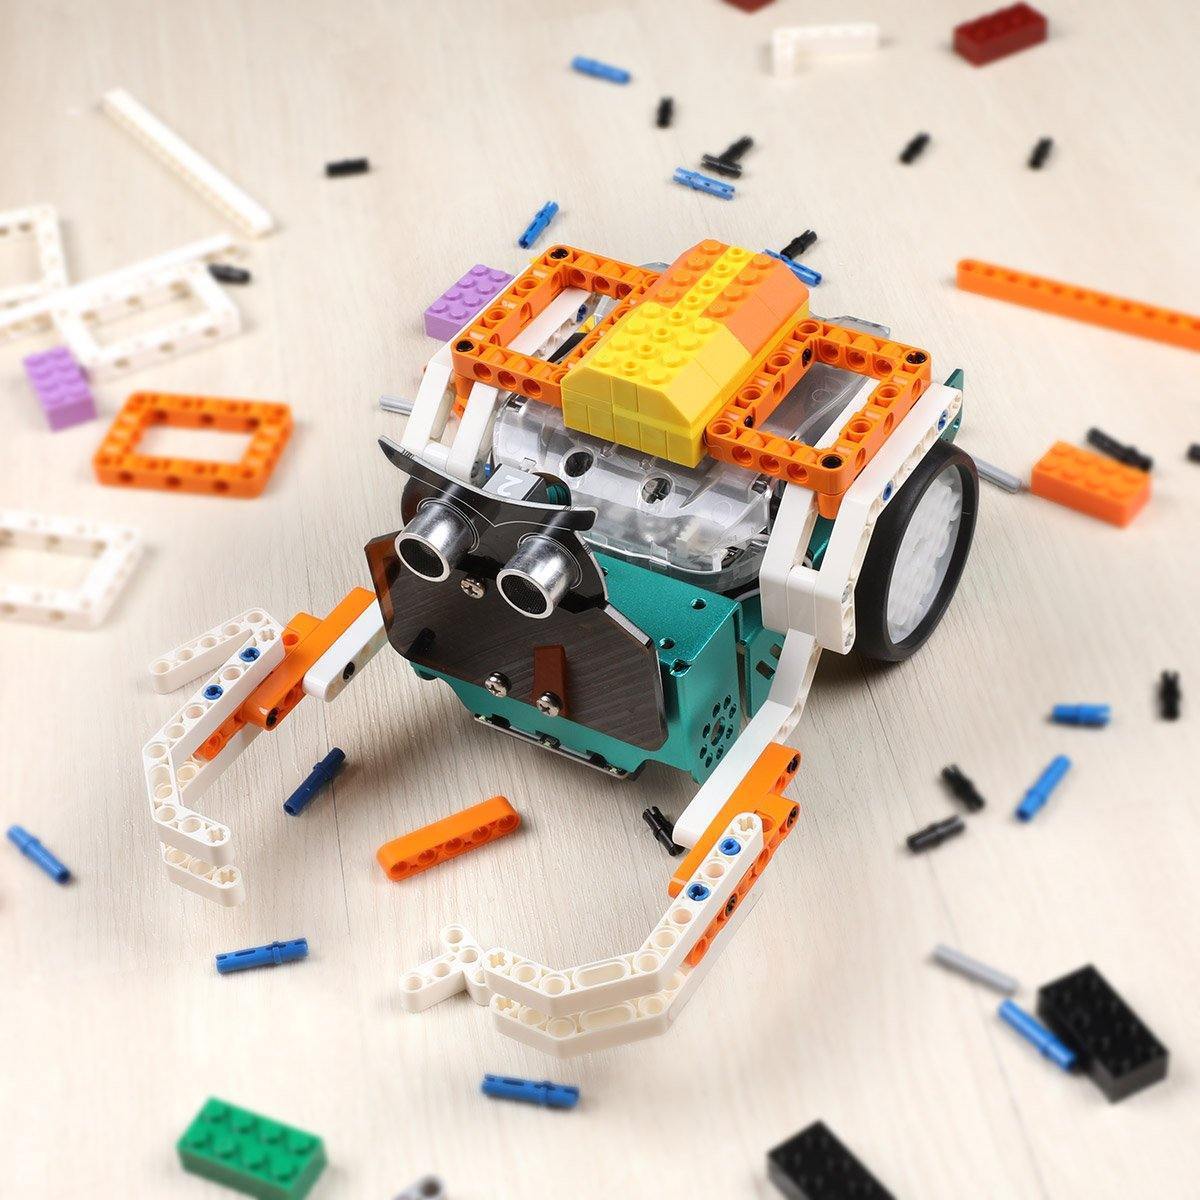 ELEGOO OwlBot Smart Robot Car Kit Compatible with Arduino IDE Arduino STEM Kits elegoo-shop 